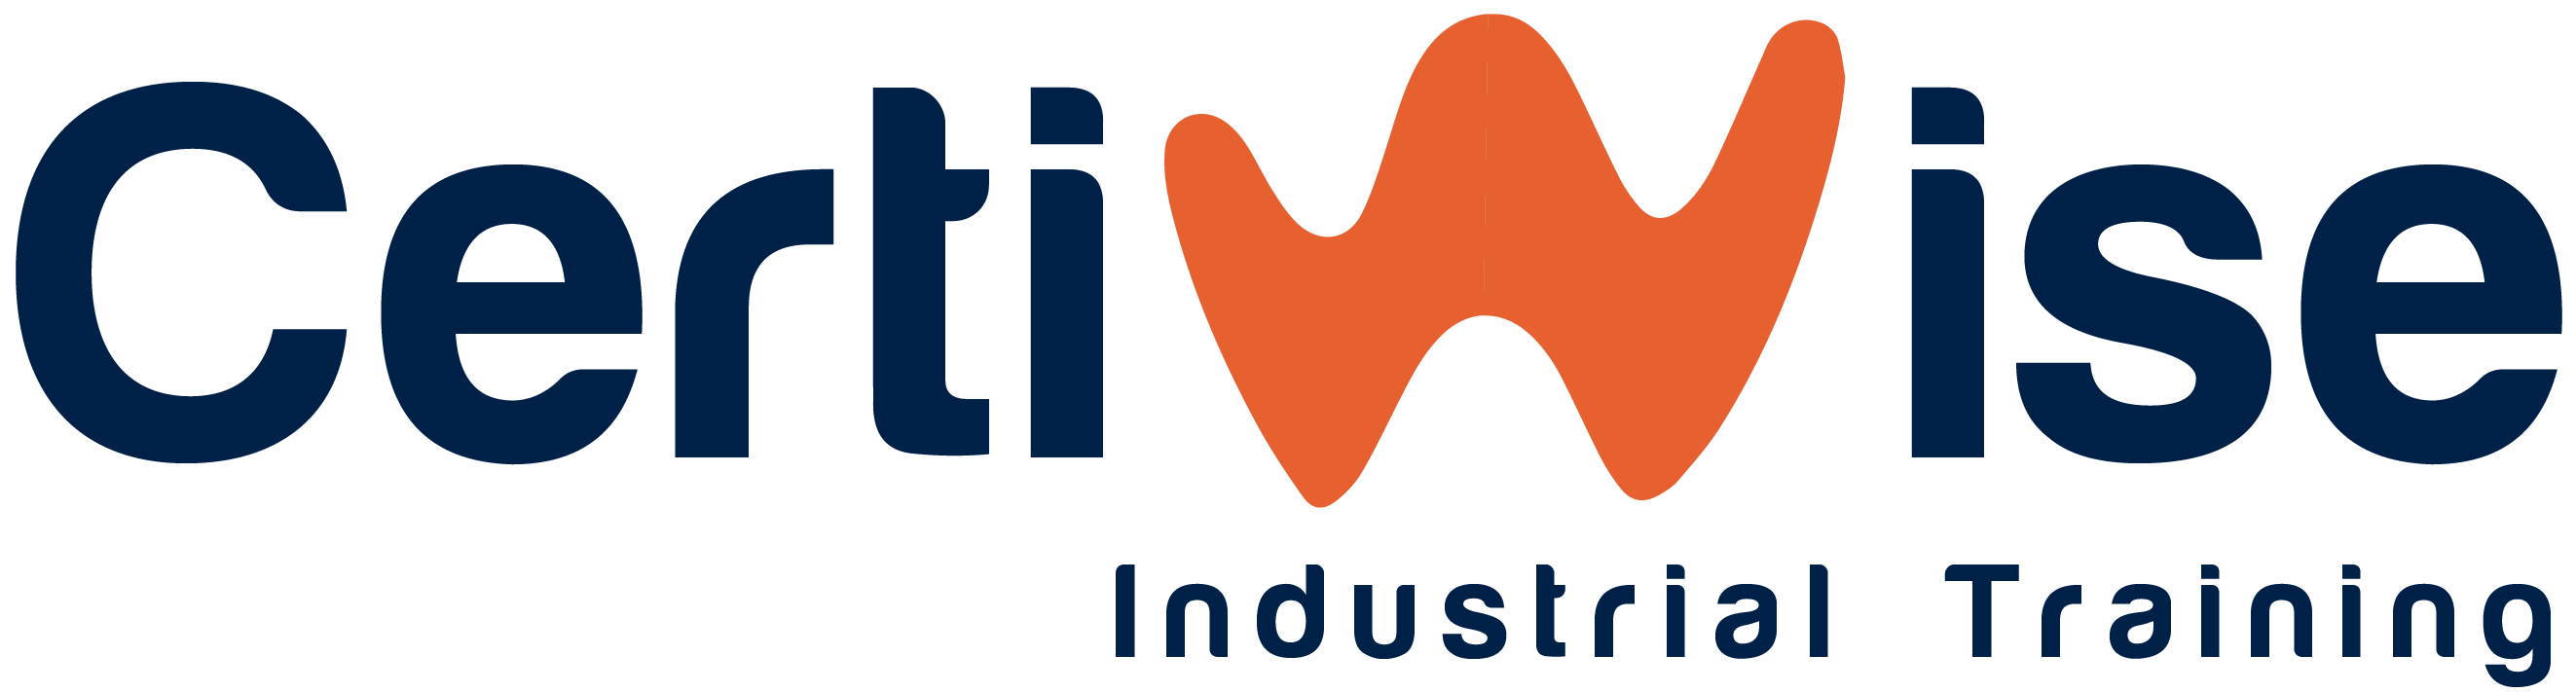 CertiWise Industrial Training Logo